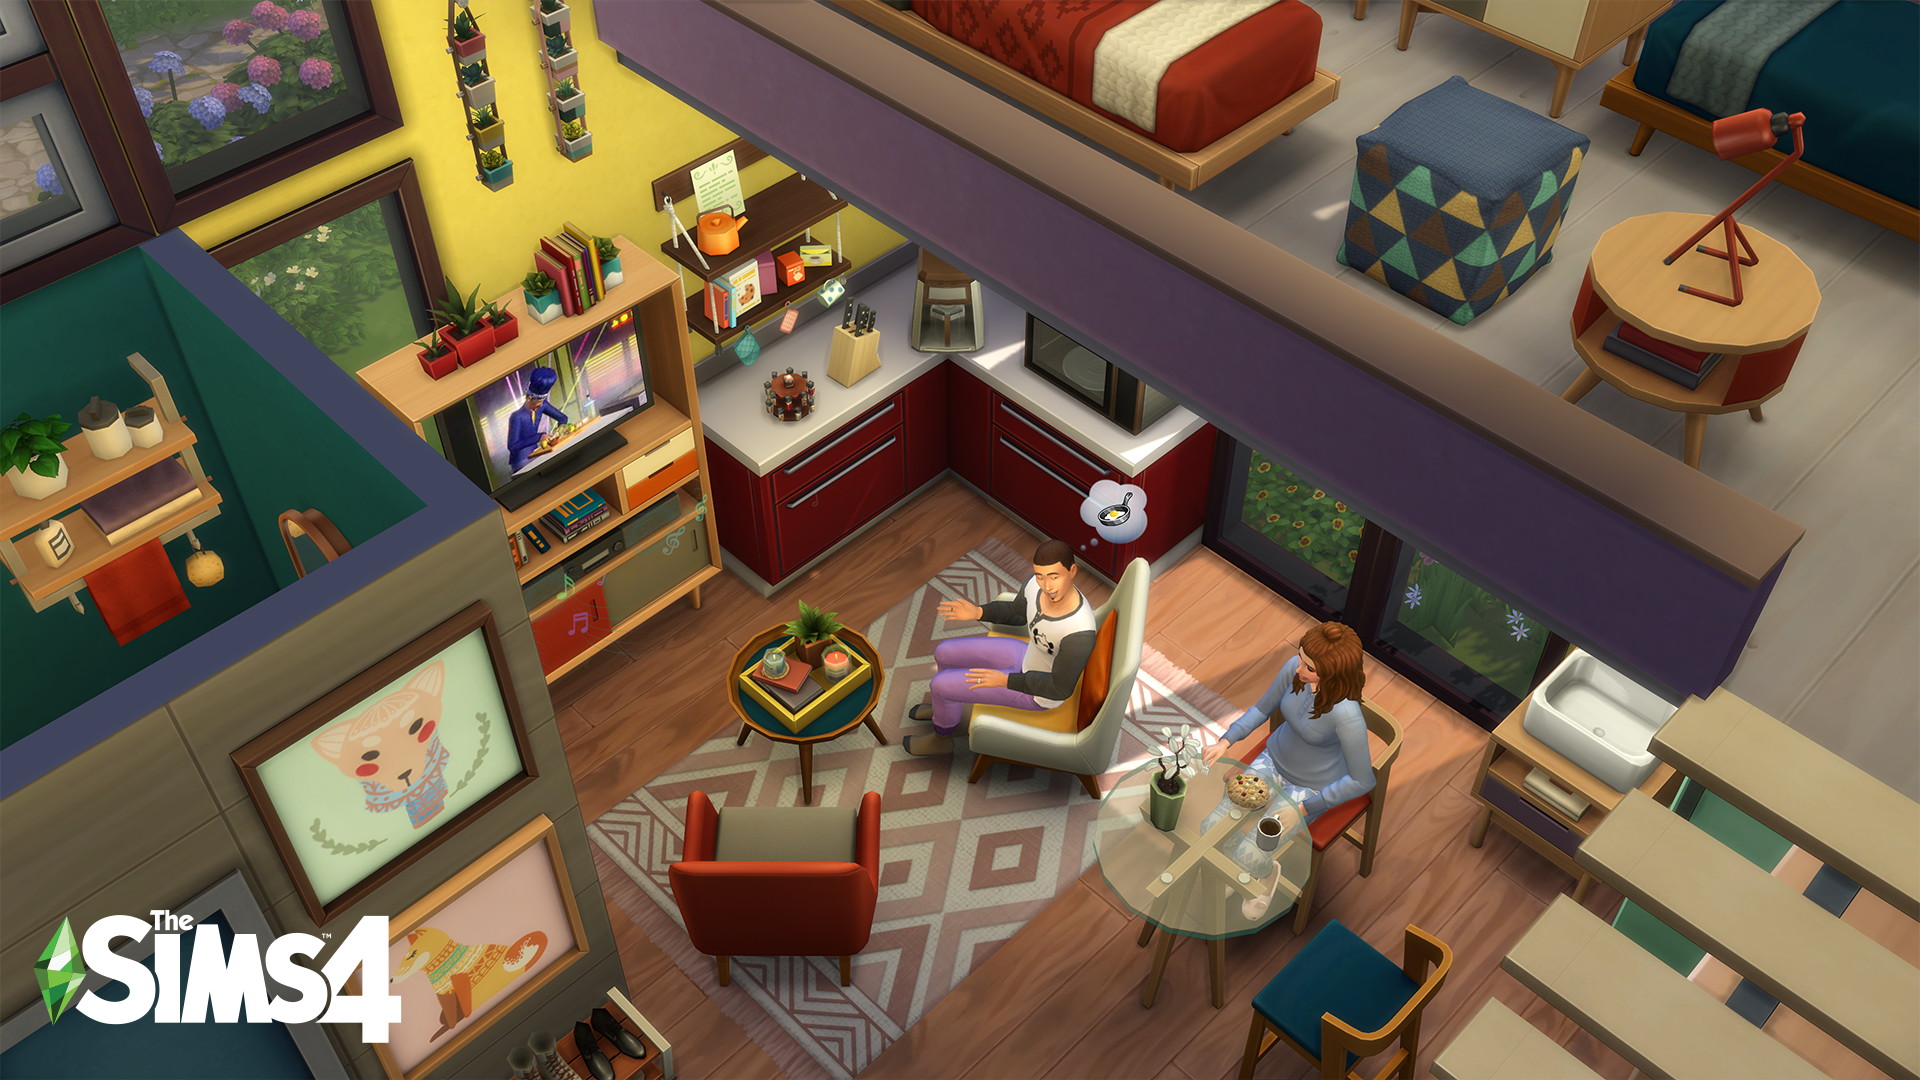 The Sims 4: Tiny Living - screenshot 2